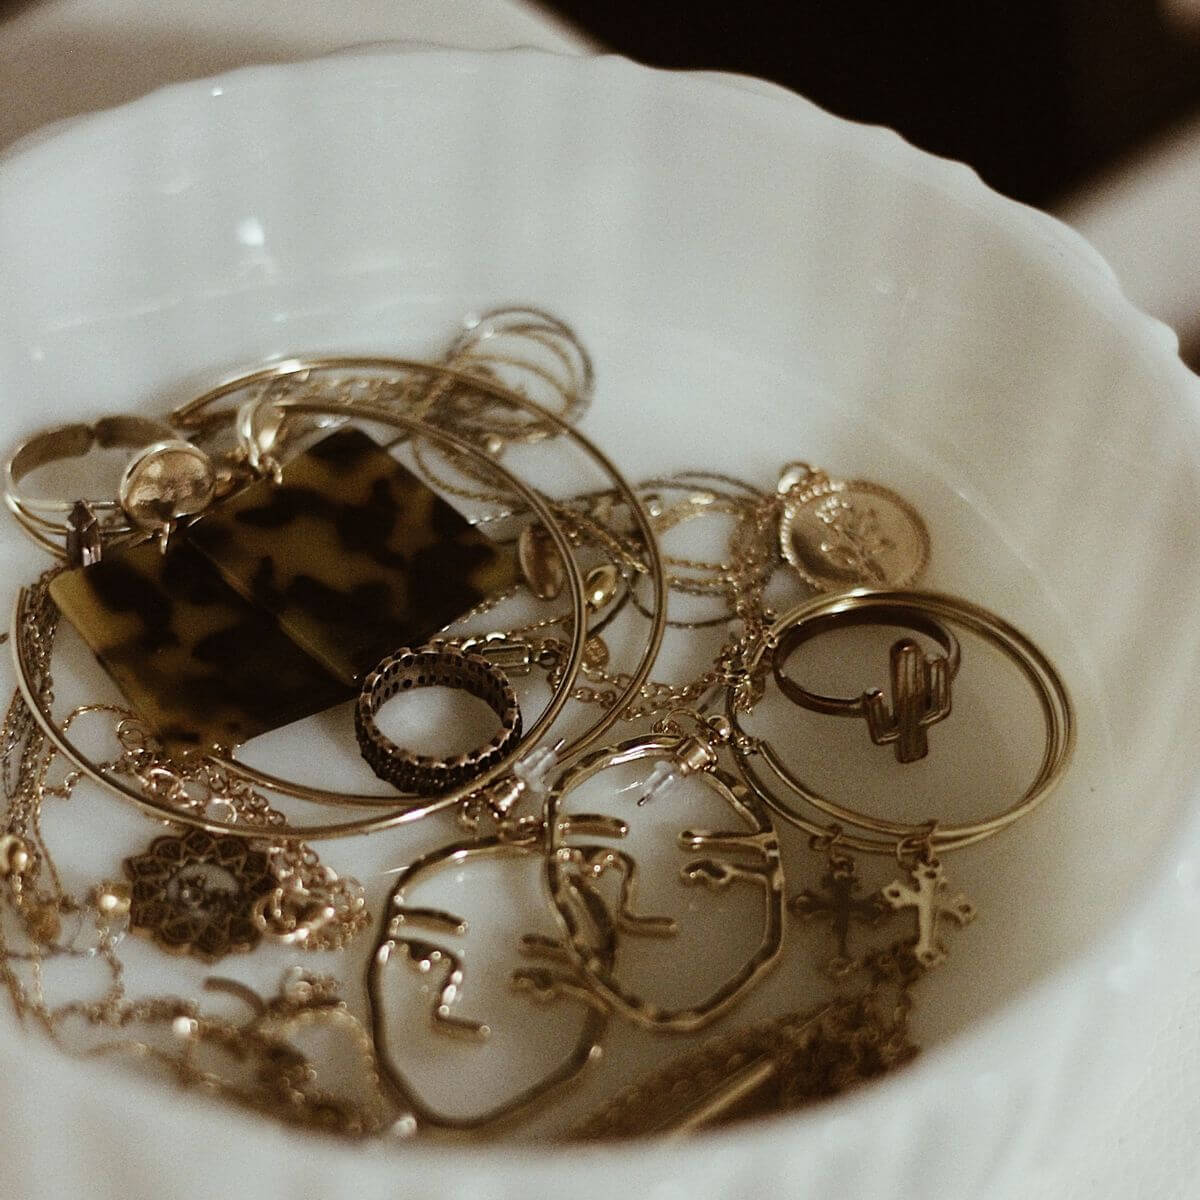 Gold jewellery stored inside a white jewellery organiser tray